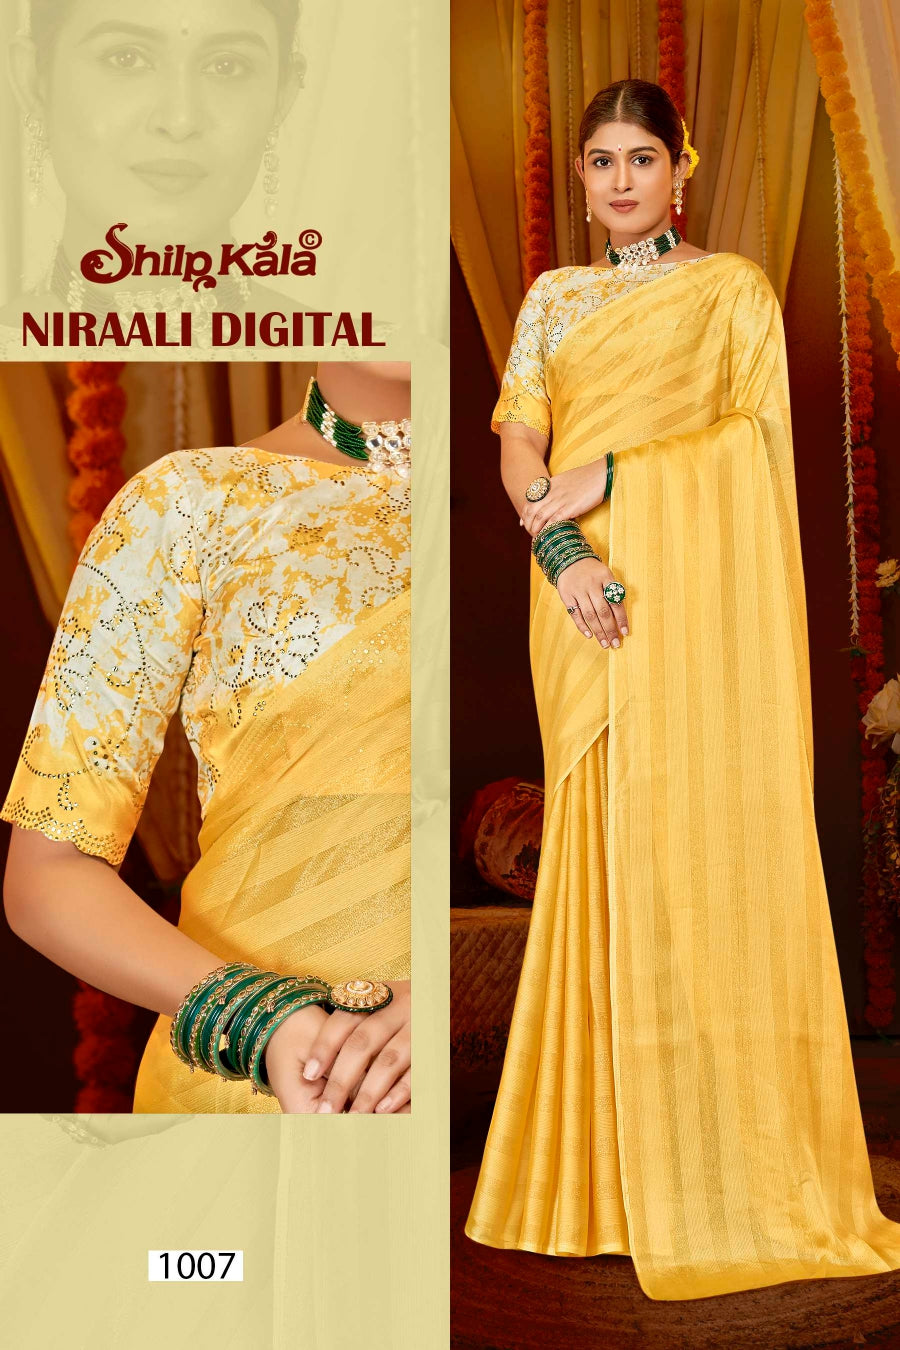 Niraali Shilpkala Fashions Multicolour Moss Saree with Digital Printed Blouse.